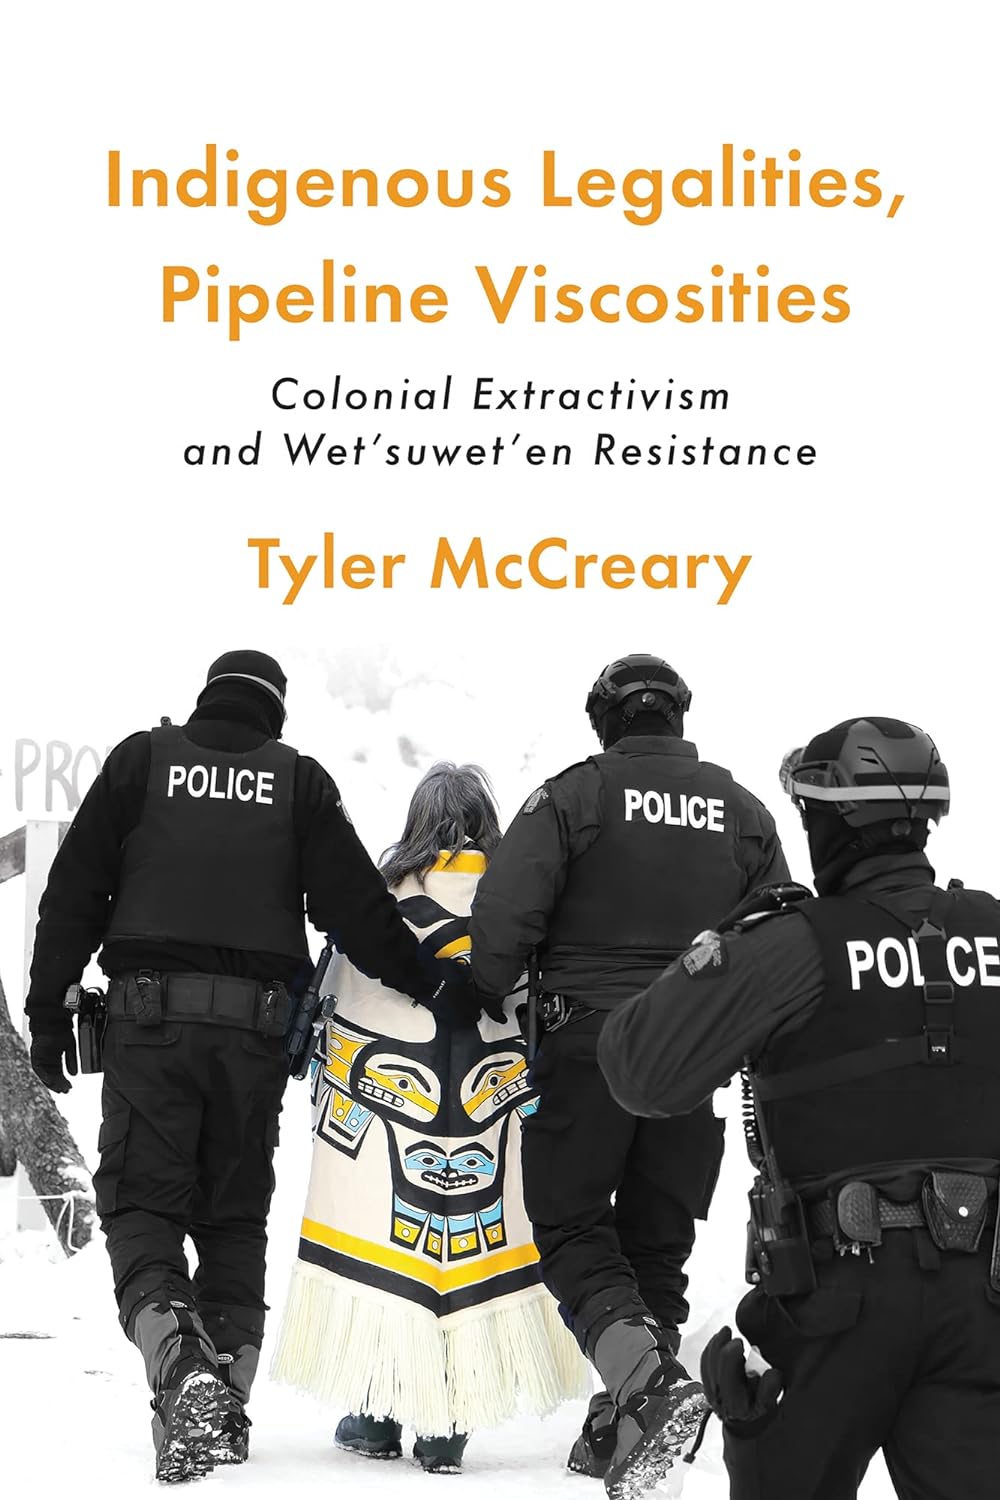 Indigenous Legalities, Pipeline Viscosities: Colonial Extractivism and Wet'suwet'en Resistance by Tyler McCreary